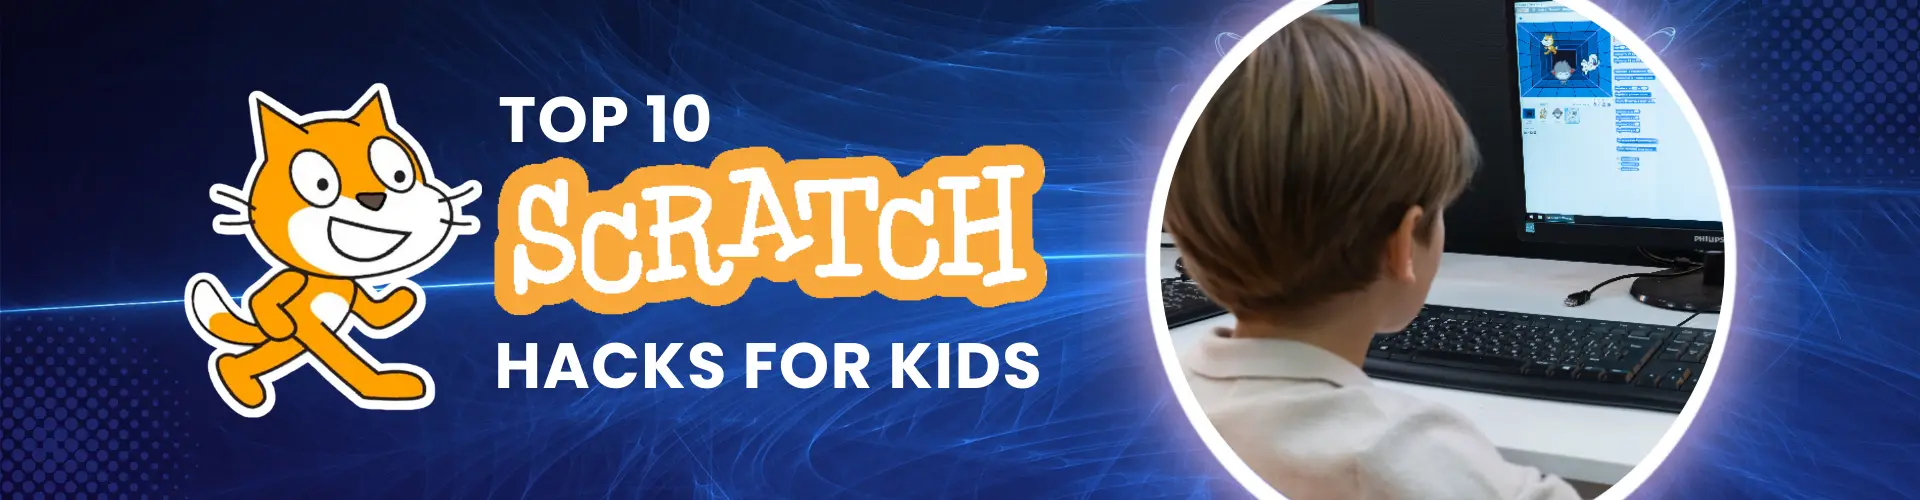 Scratch Hacks for Kids